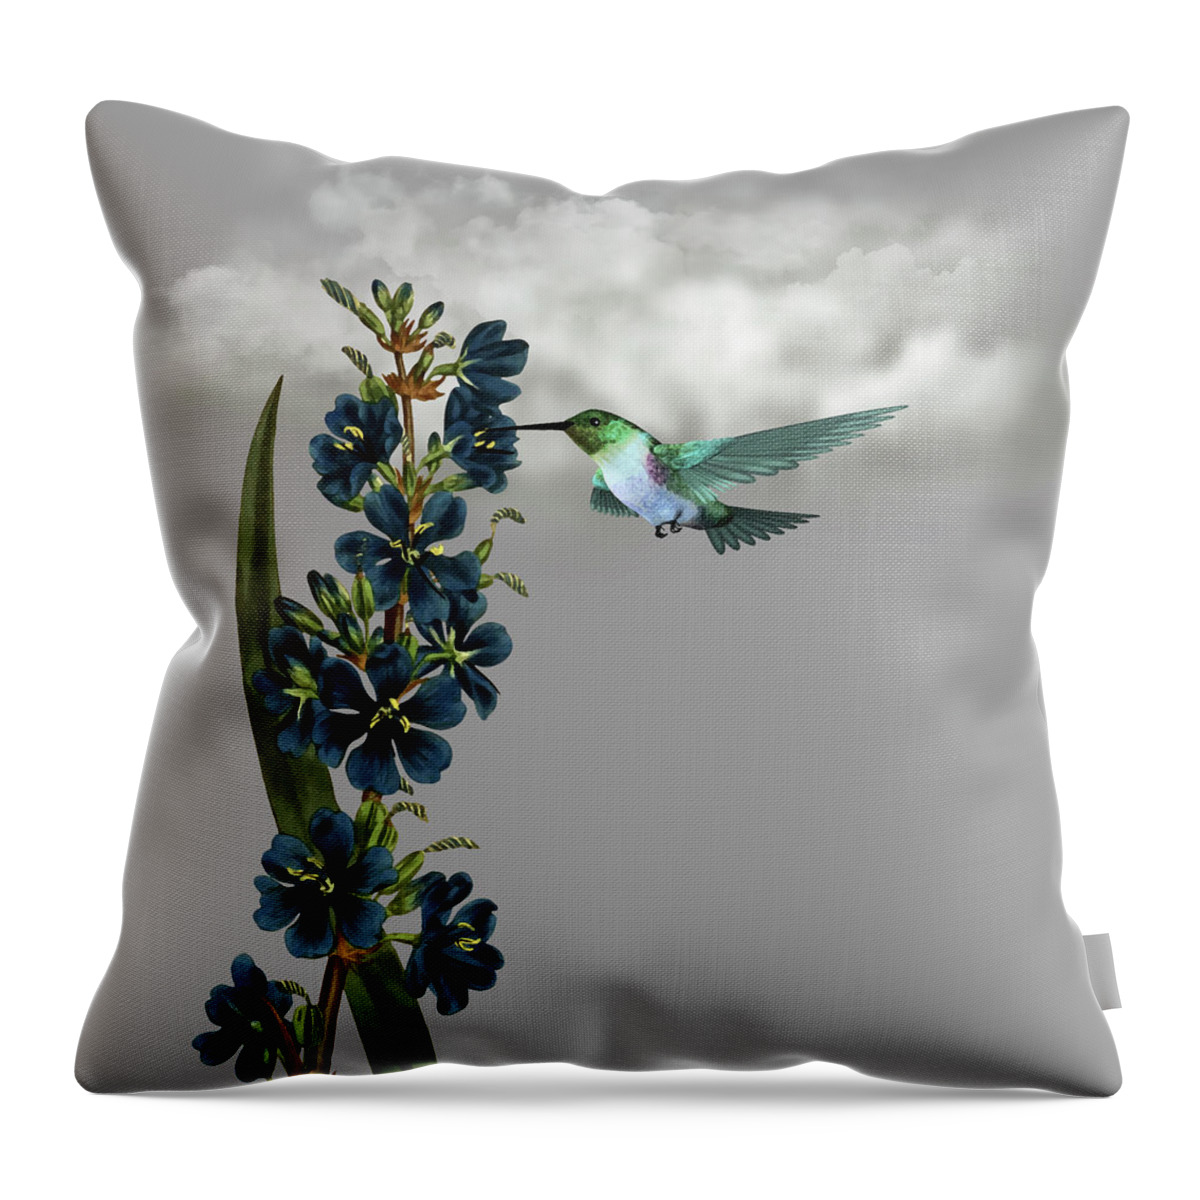 Hummingbird Throw Pillow featuring the digital art Hummingbird in the Garden Pane 1 by David Dehner